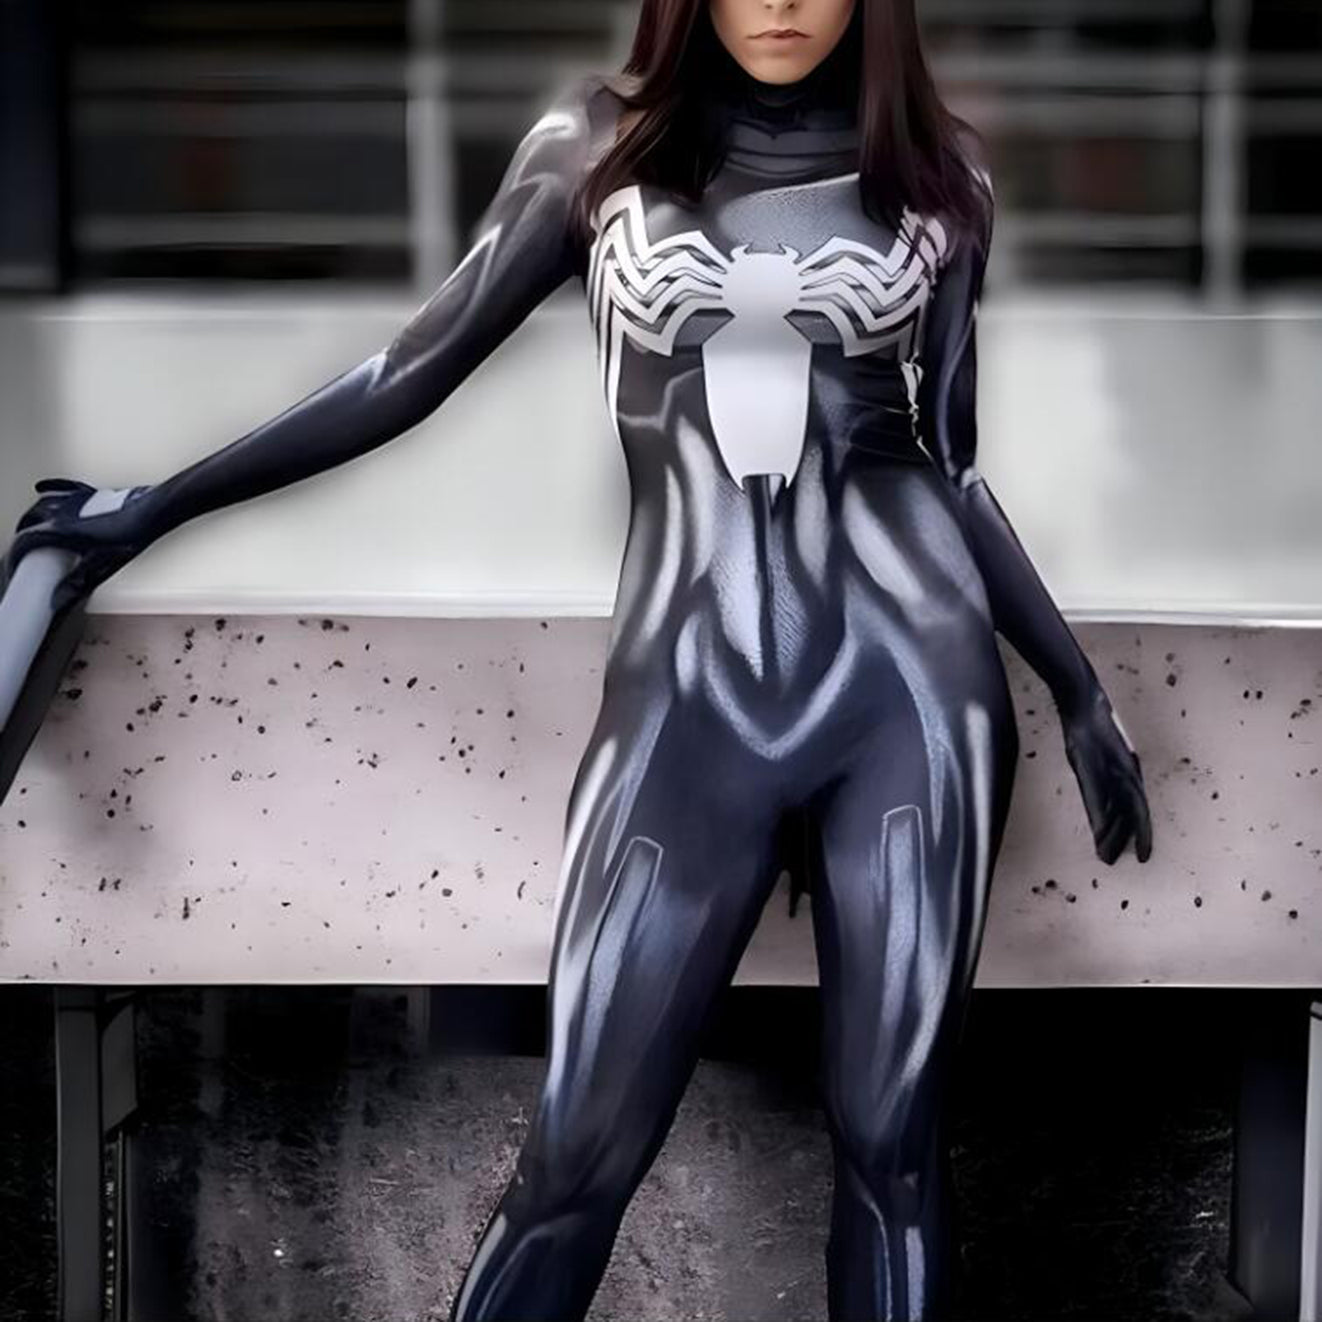 Woman Black Venom Spiderman Symbiote Jumpsuit Cosplay Costume